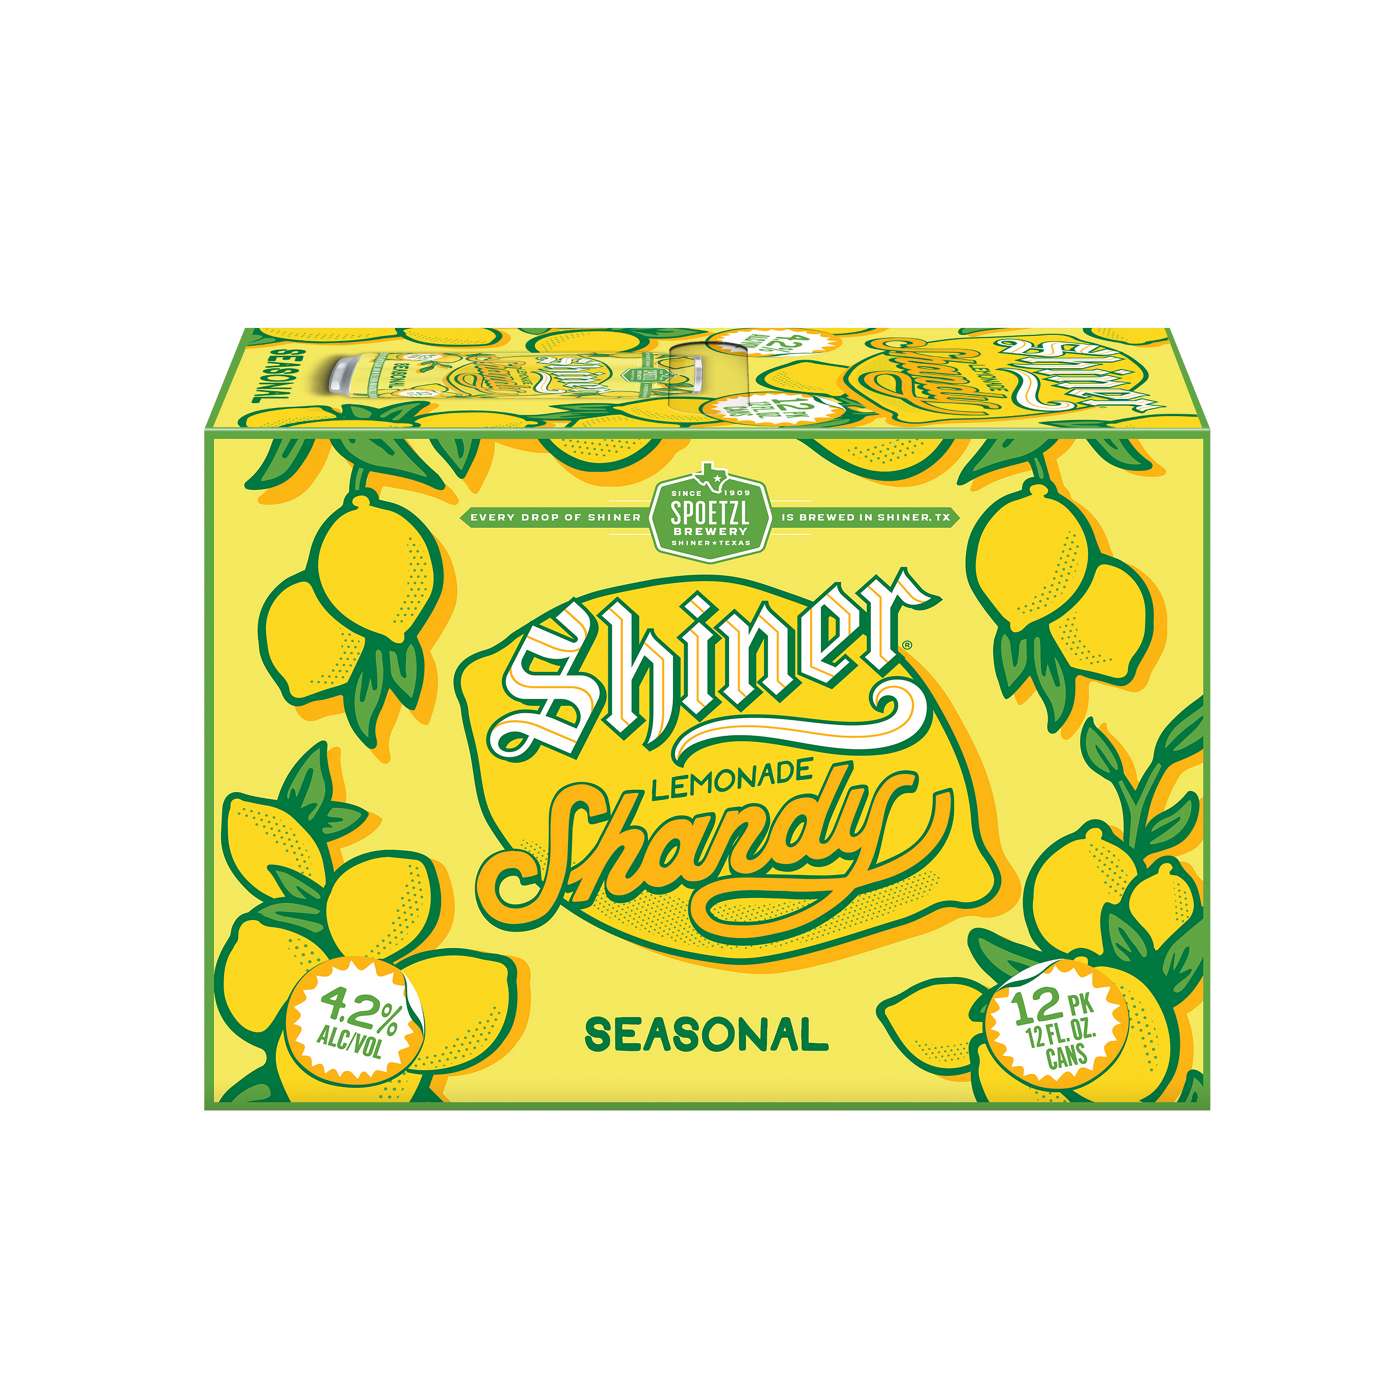 Shiner Seasonal Beer 12 pk Cans - Peach Wheat OR Lemonade Shandy; image 2 of 3